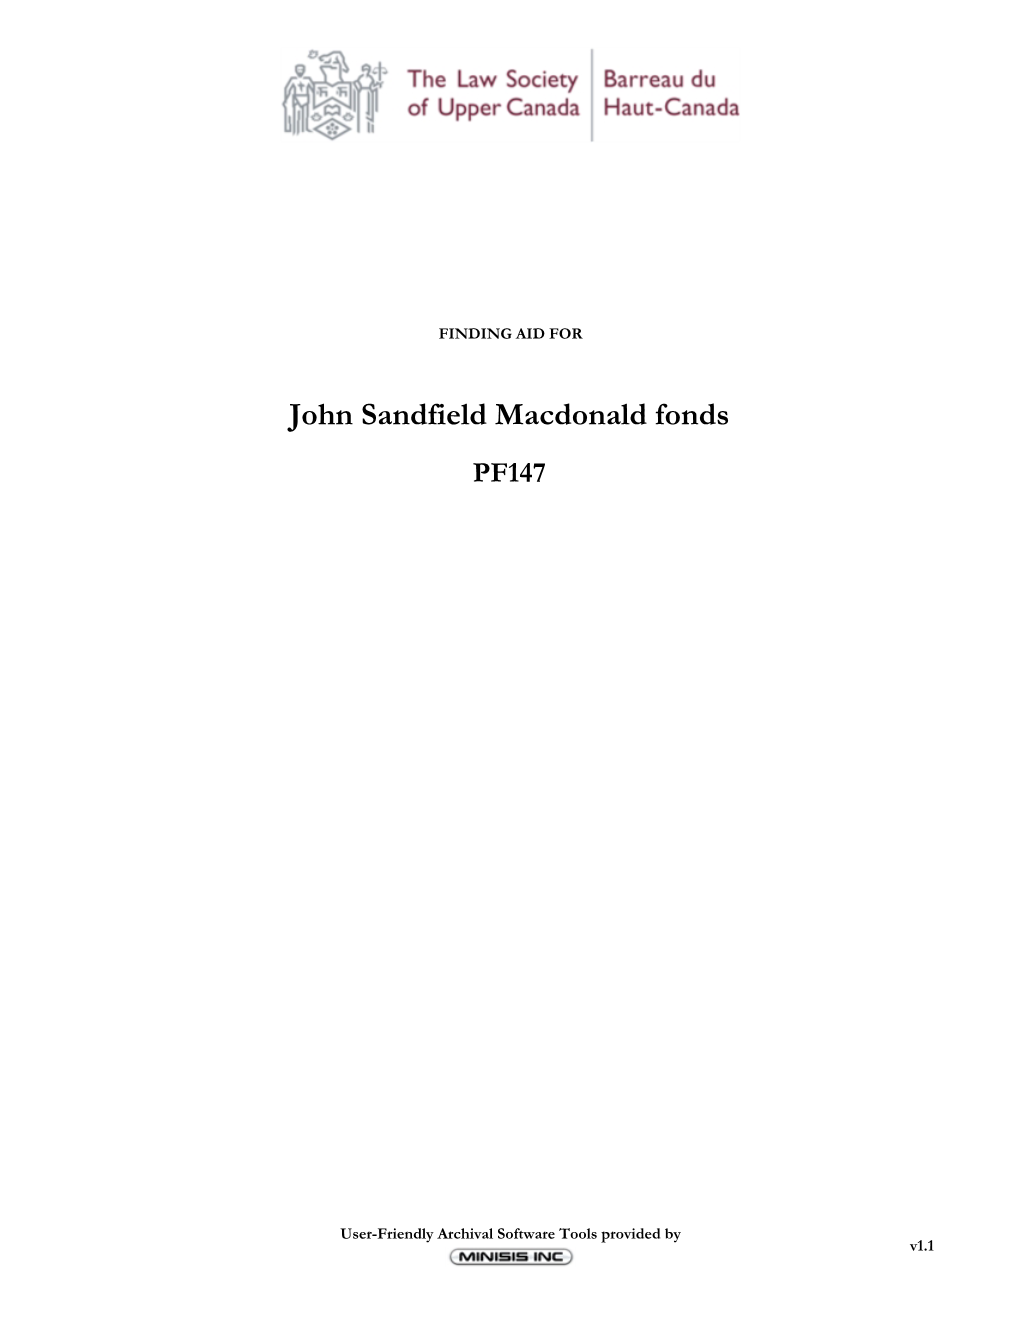 John Sandfield Macdonald Fonds PF147